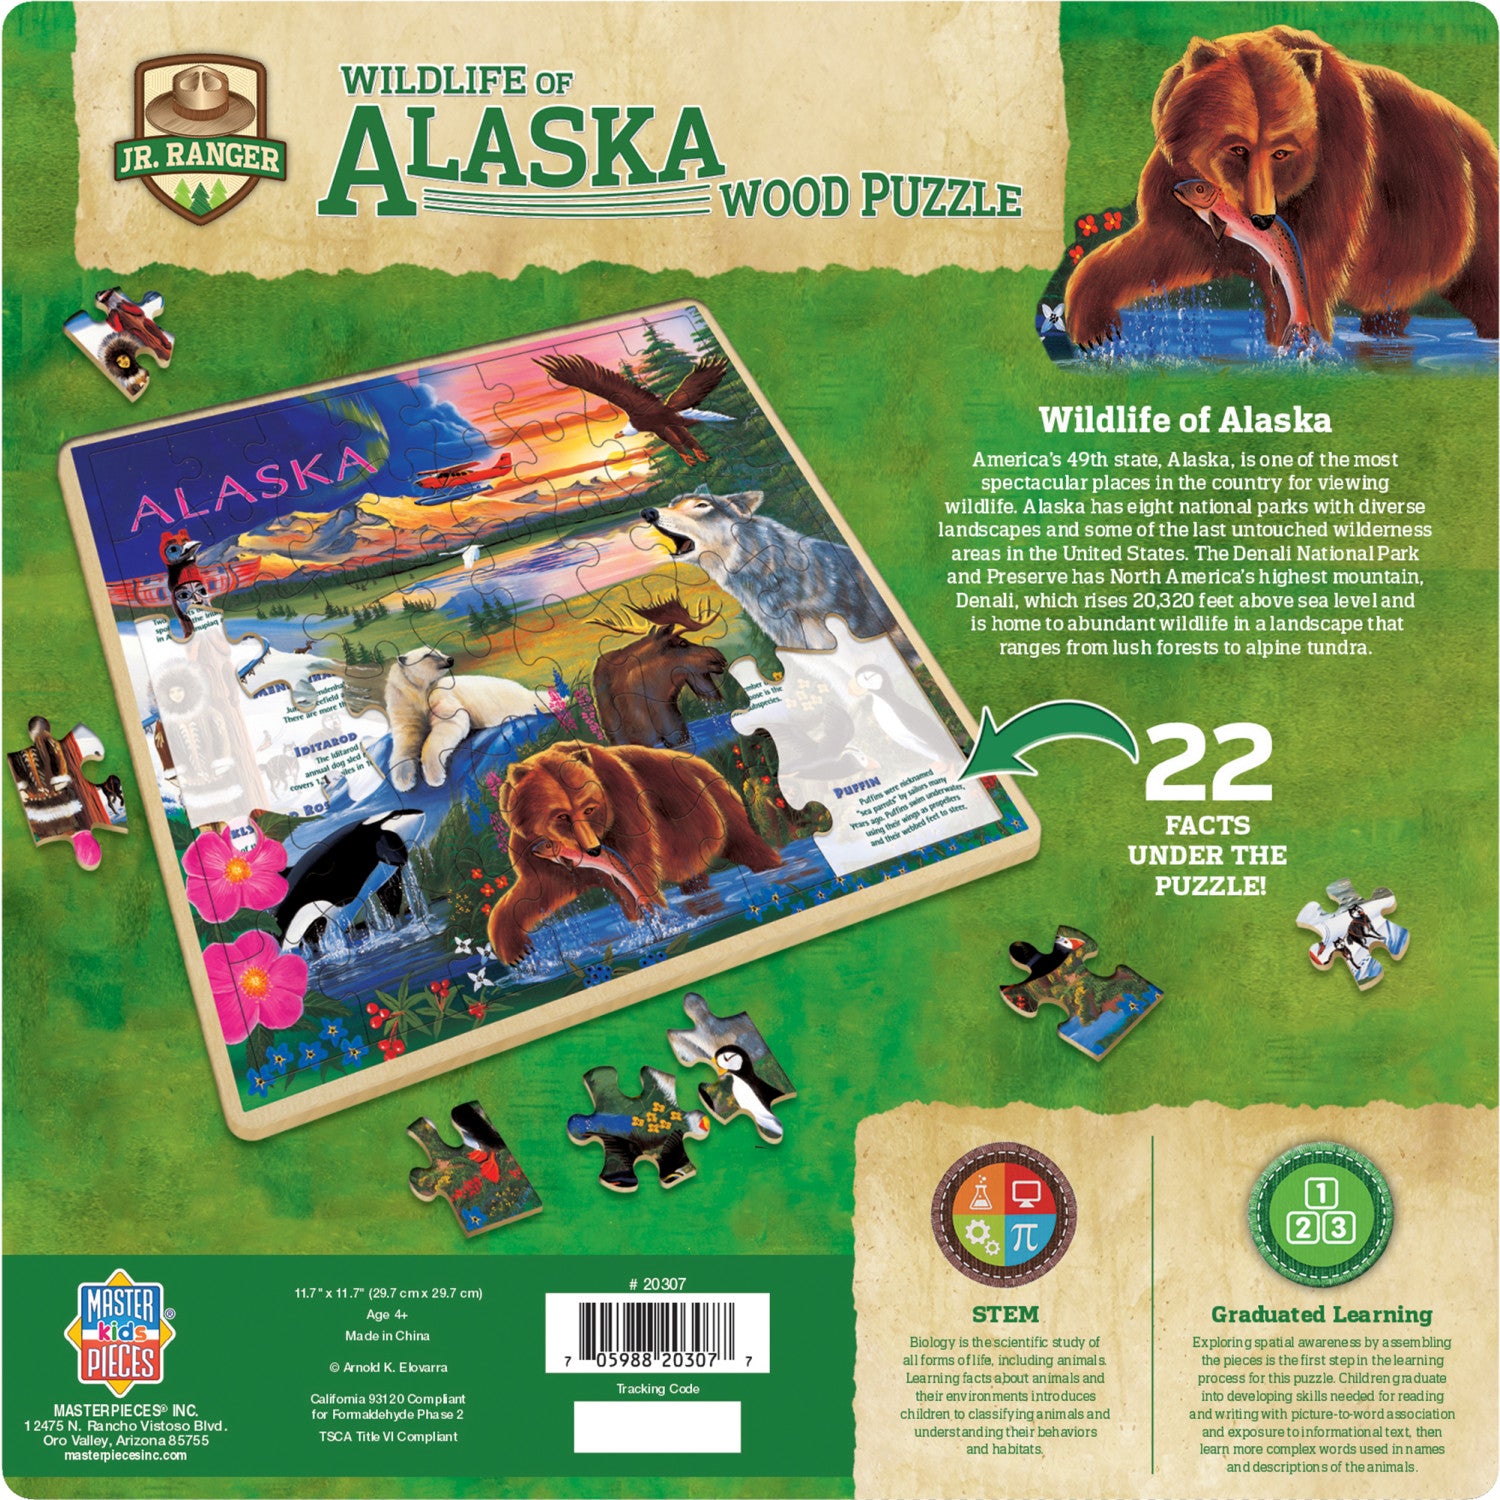 Jr. Ranger - Wildlife of Alaska 48 Piece Wood Jigsaw Puzzle